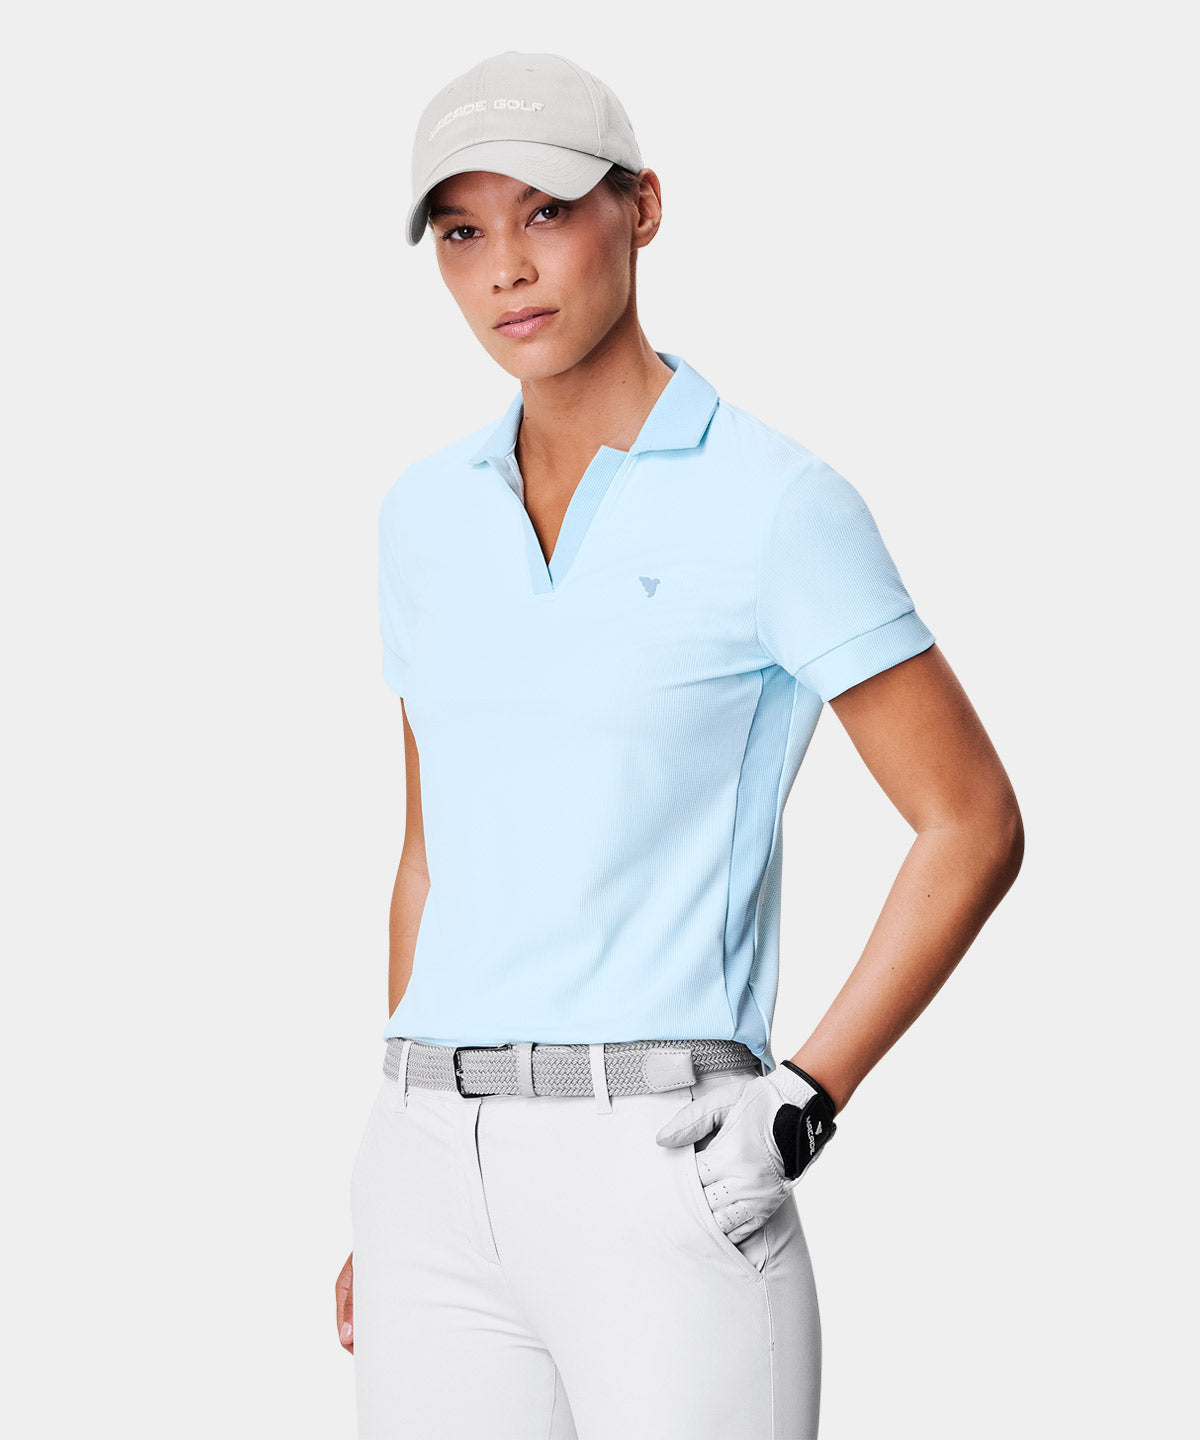 Tori Dark Blue Polo Shirt - Macade Golf